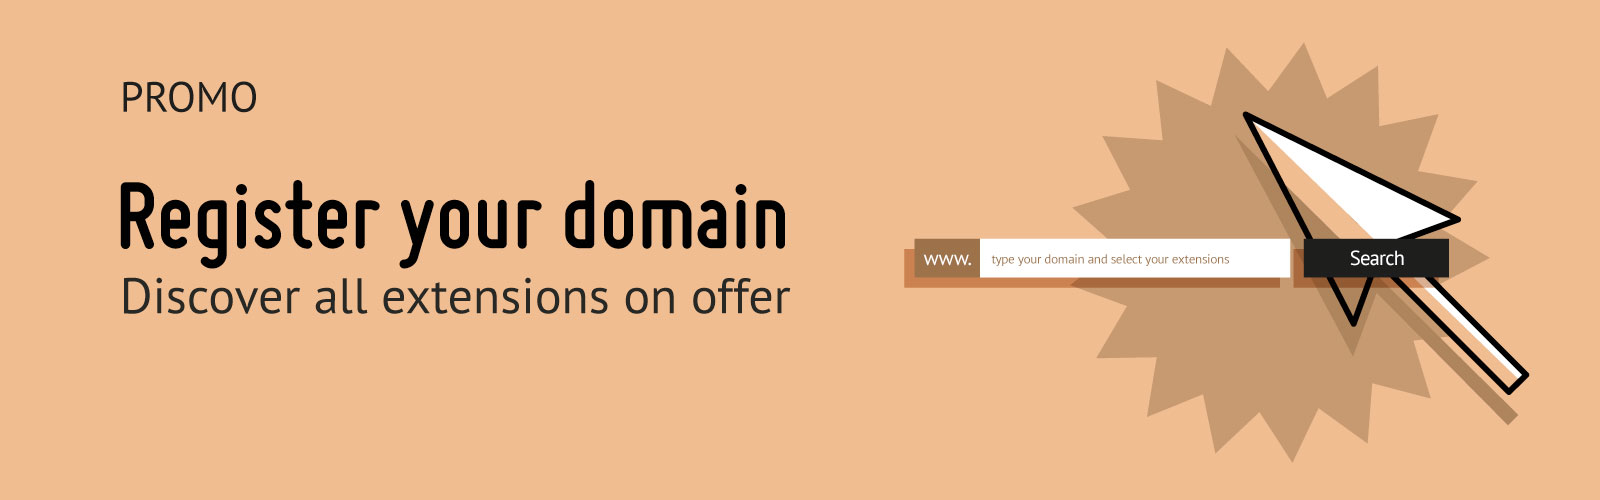 Domains PROMO